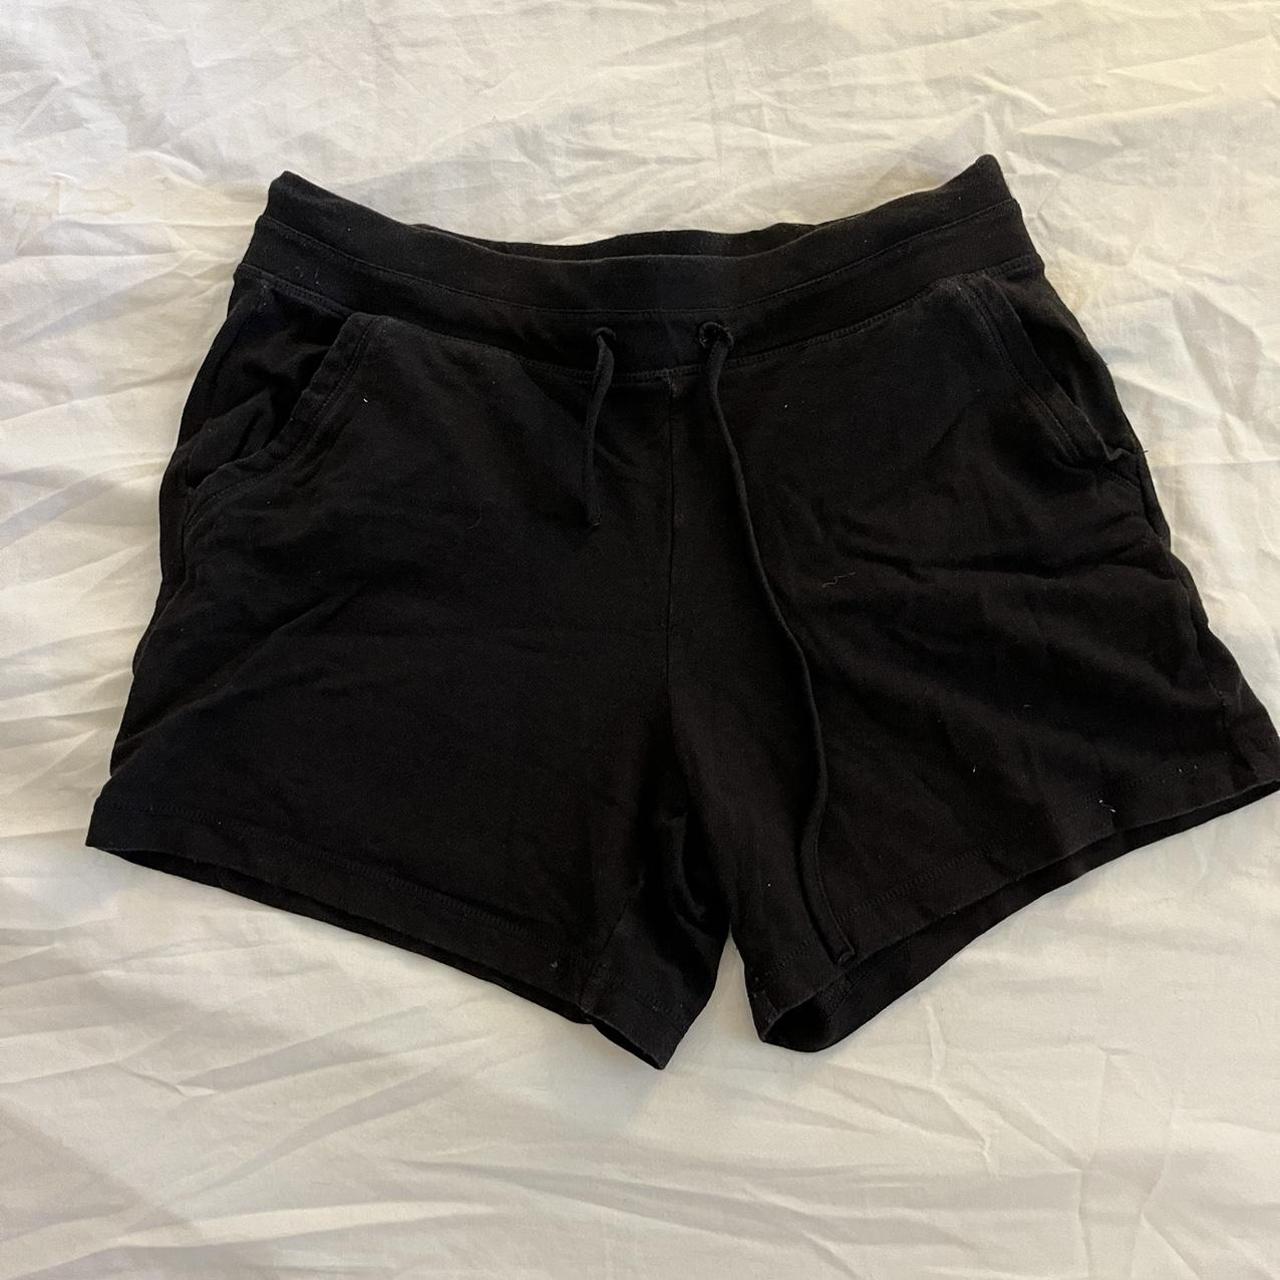 Costco Women's Black Shorts | Depop